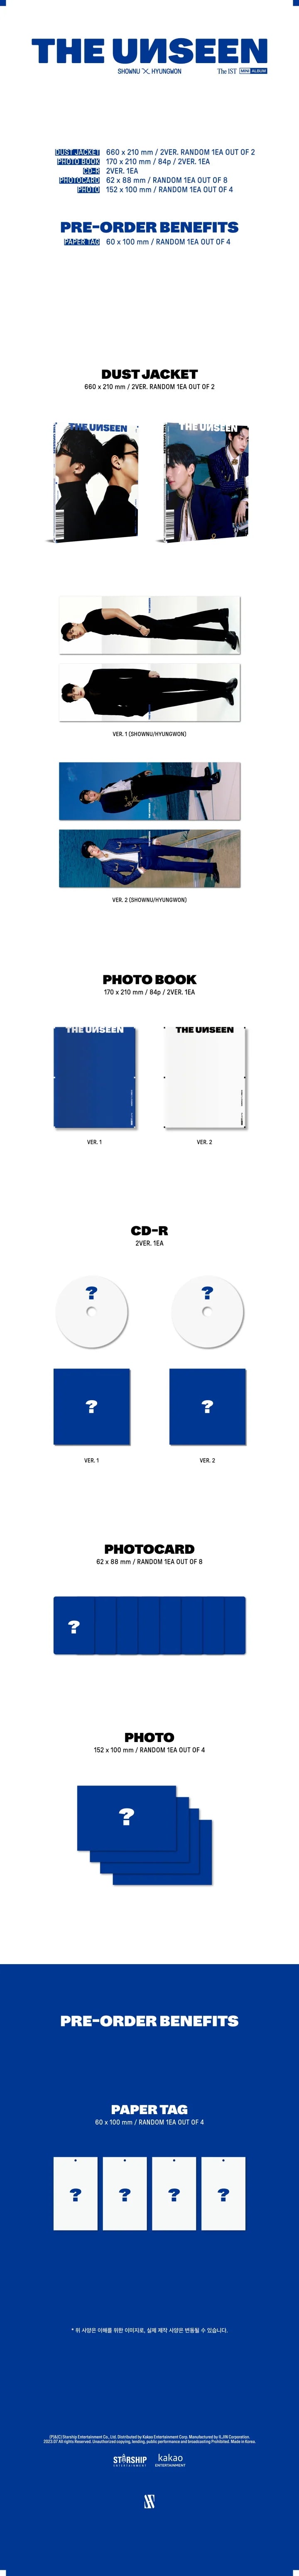 SHOWNU x HYUNGWON  MONSTA X  - 1st Mini Album THE UNSEEN Infographic